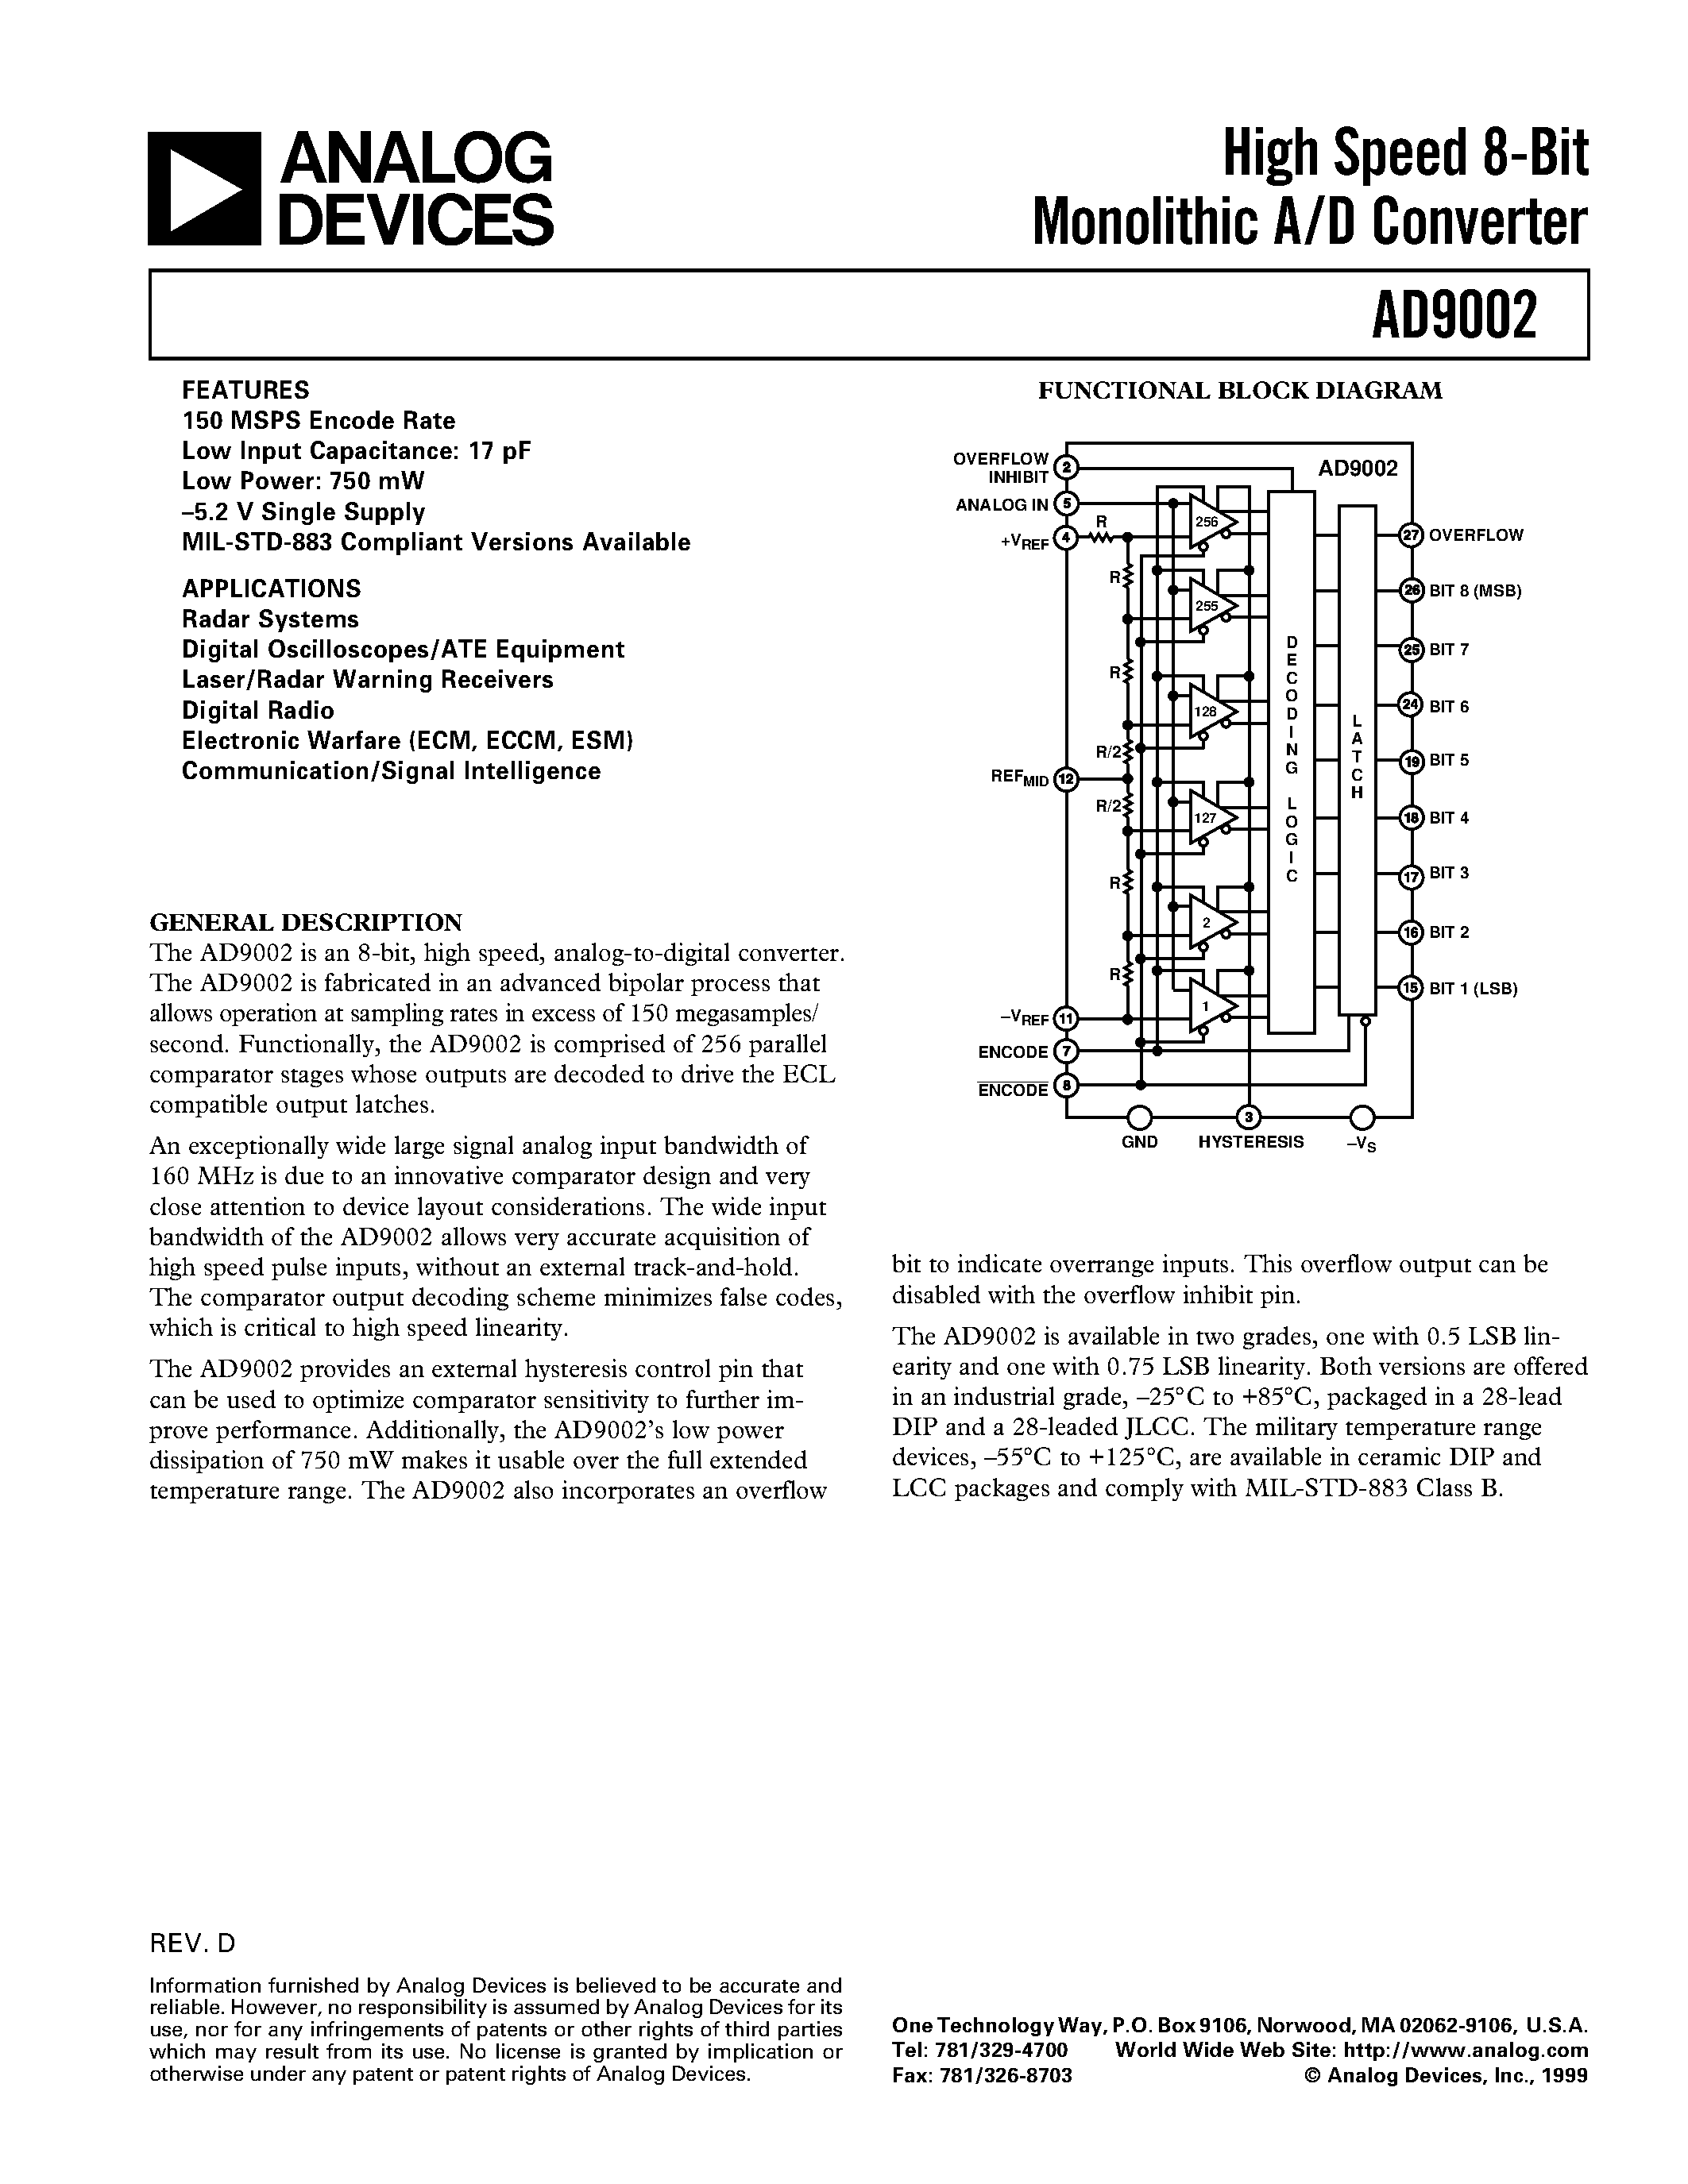 Даташит AD9002 - High Speed 8-Bit Monolithic A/D Converter страница 1